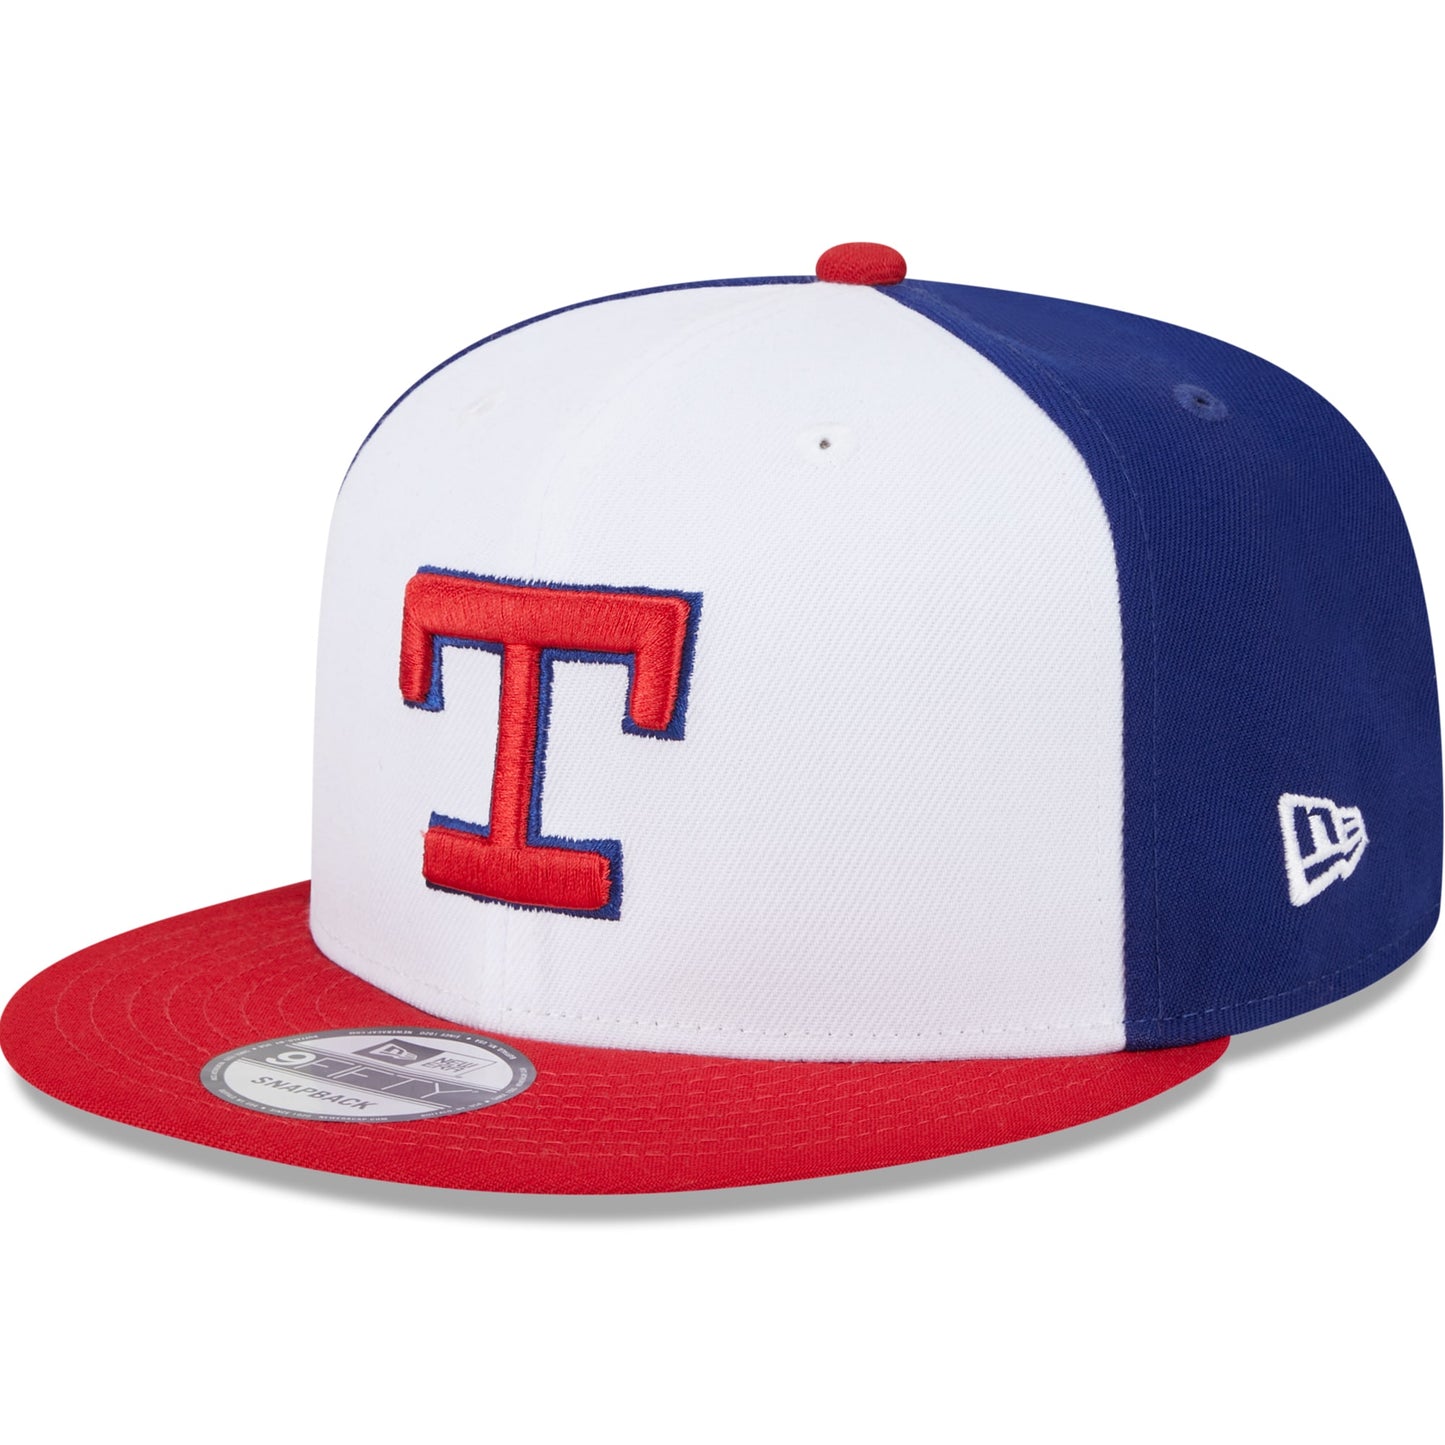 New Era 9FIFTY Texas Rangers Snapback